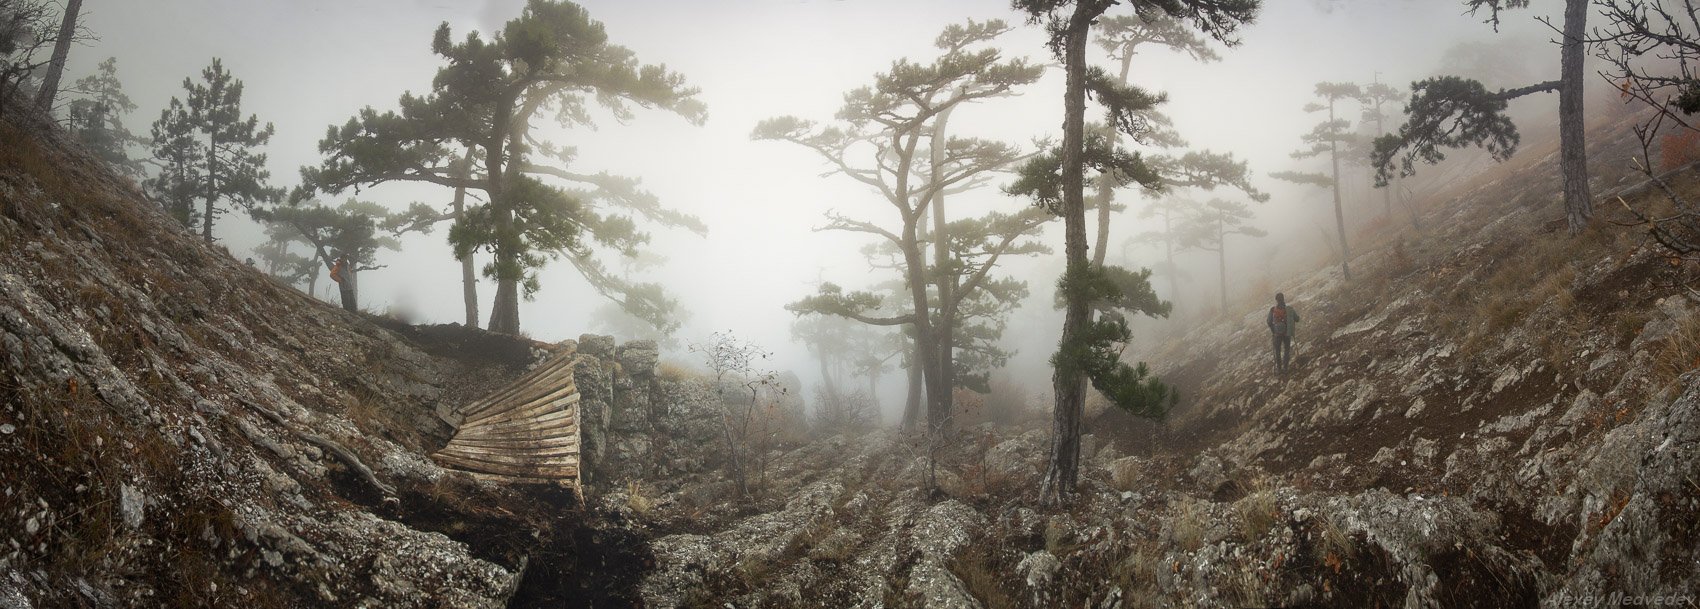 крым, горы, туман, мистика, облако, яйла, ай-петри, лес, Алексей Медведев